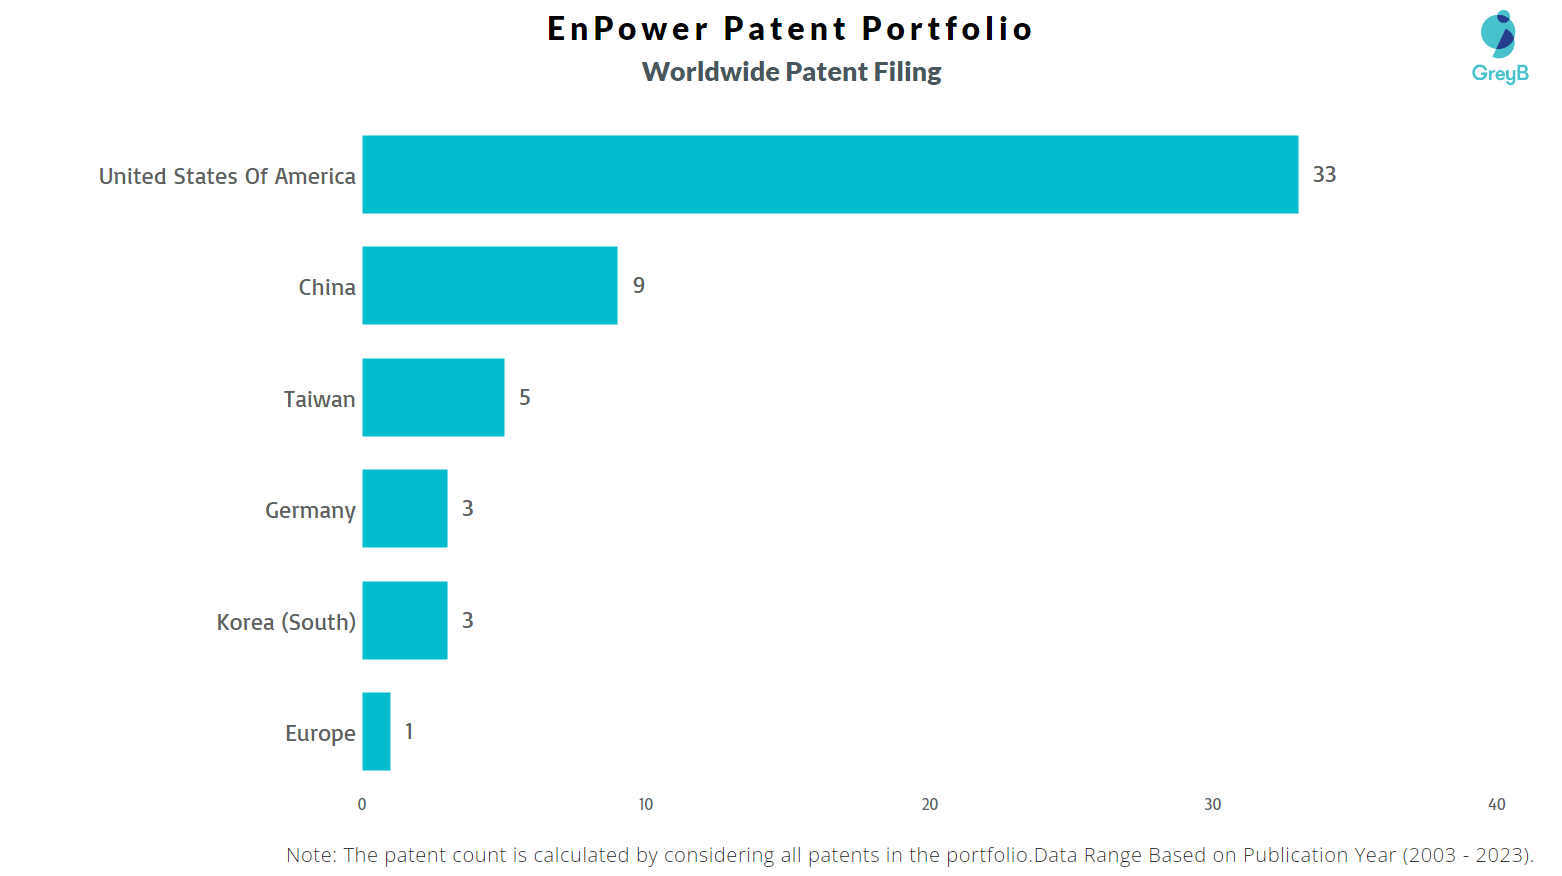 EnPower Worldwide Patent Filing